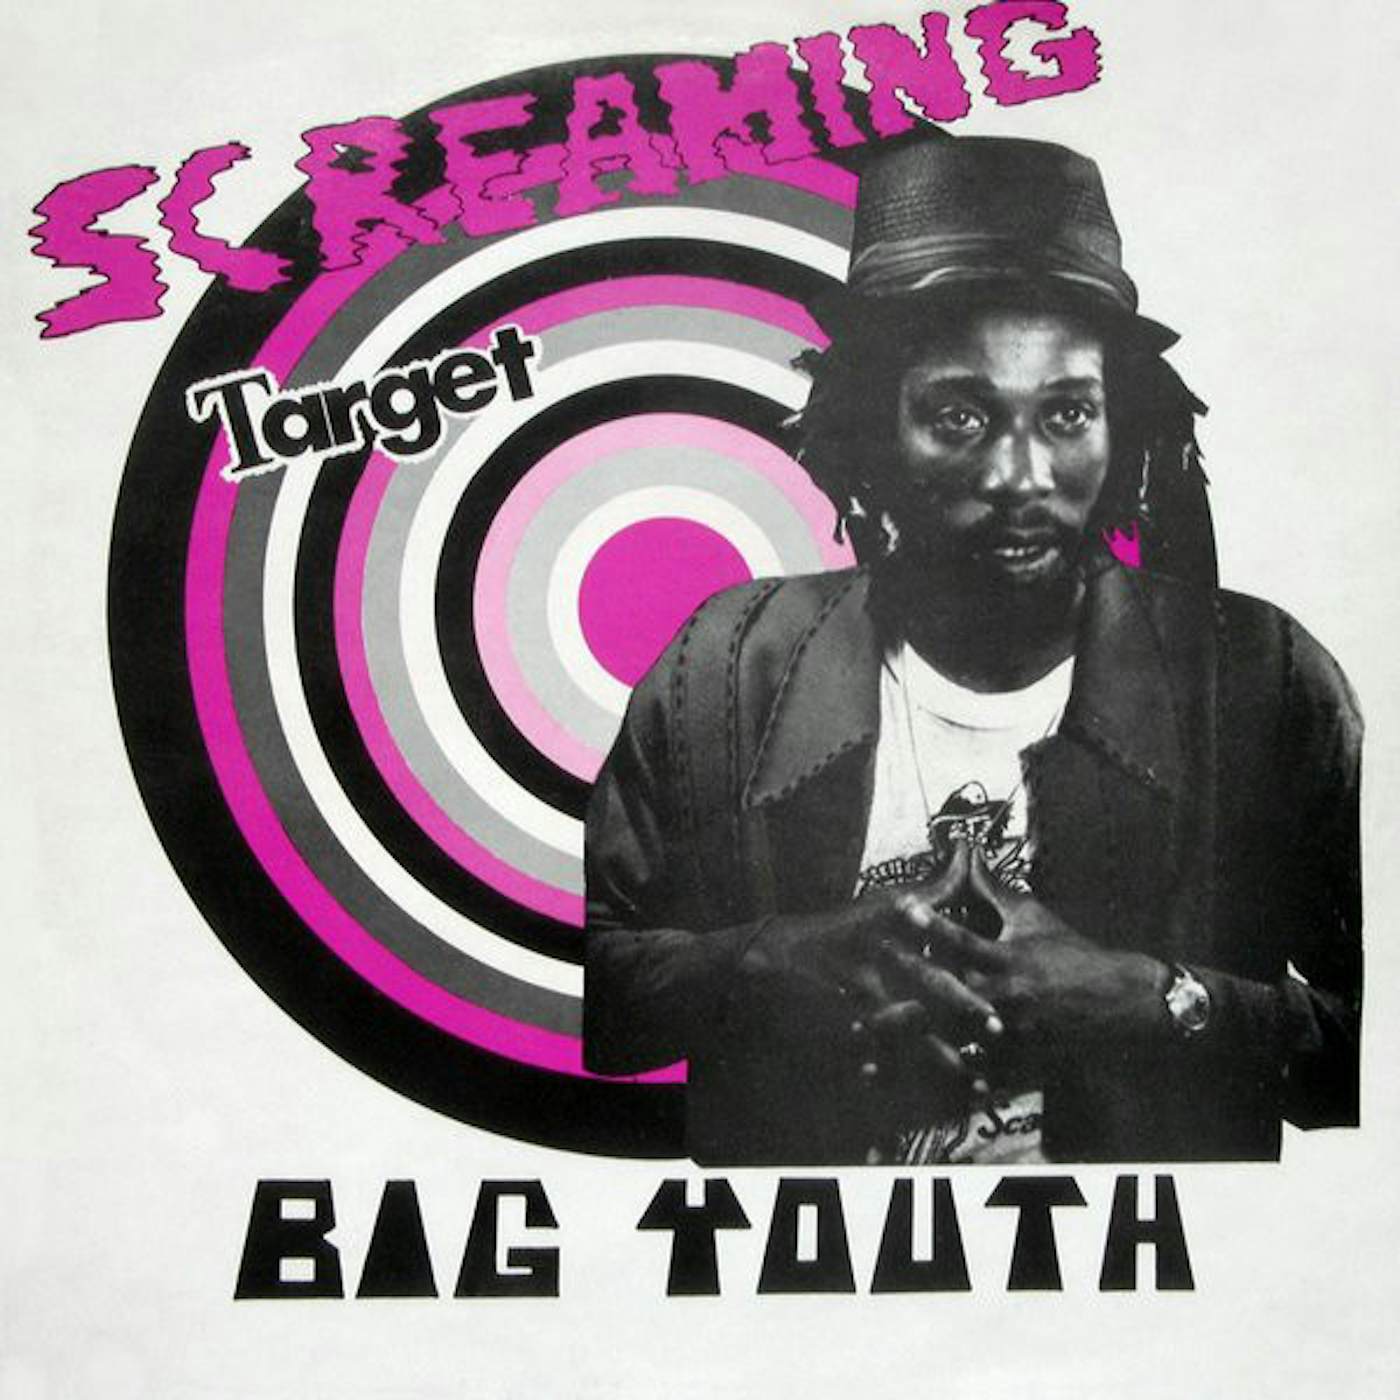 Big Youth Screaming Target Vinyl Record